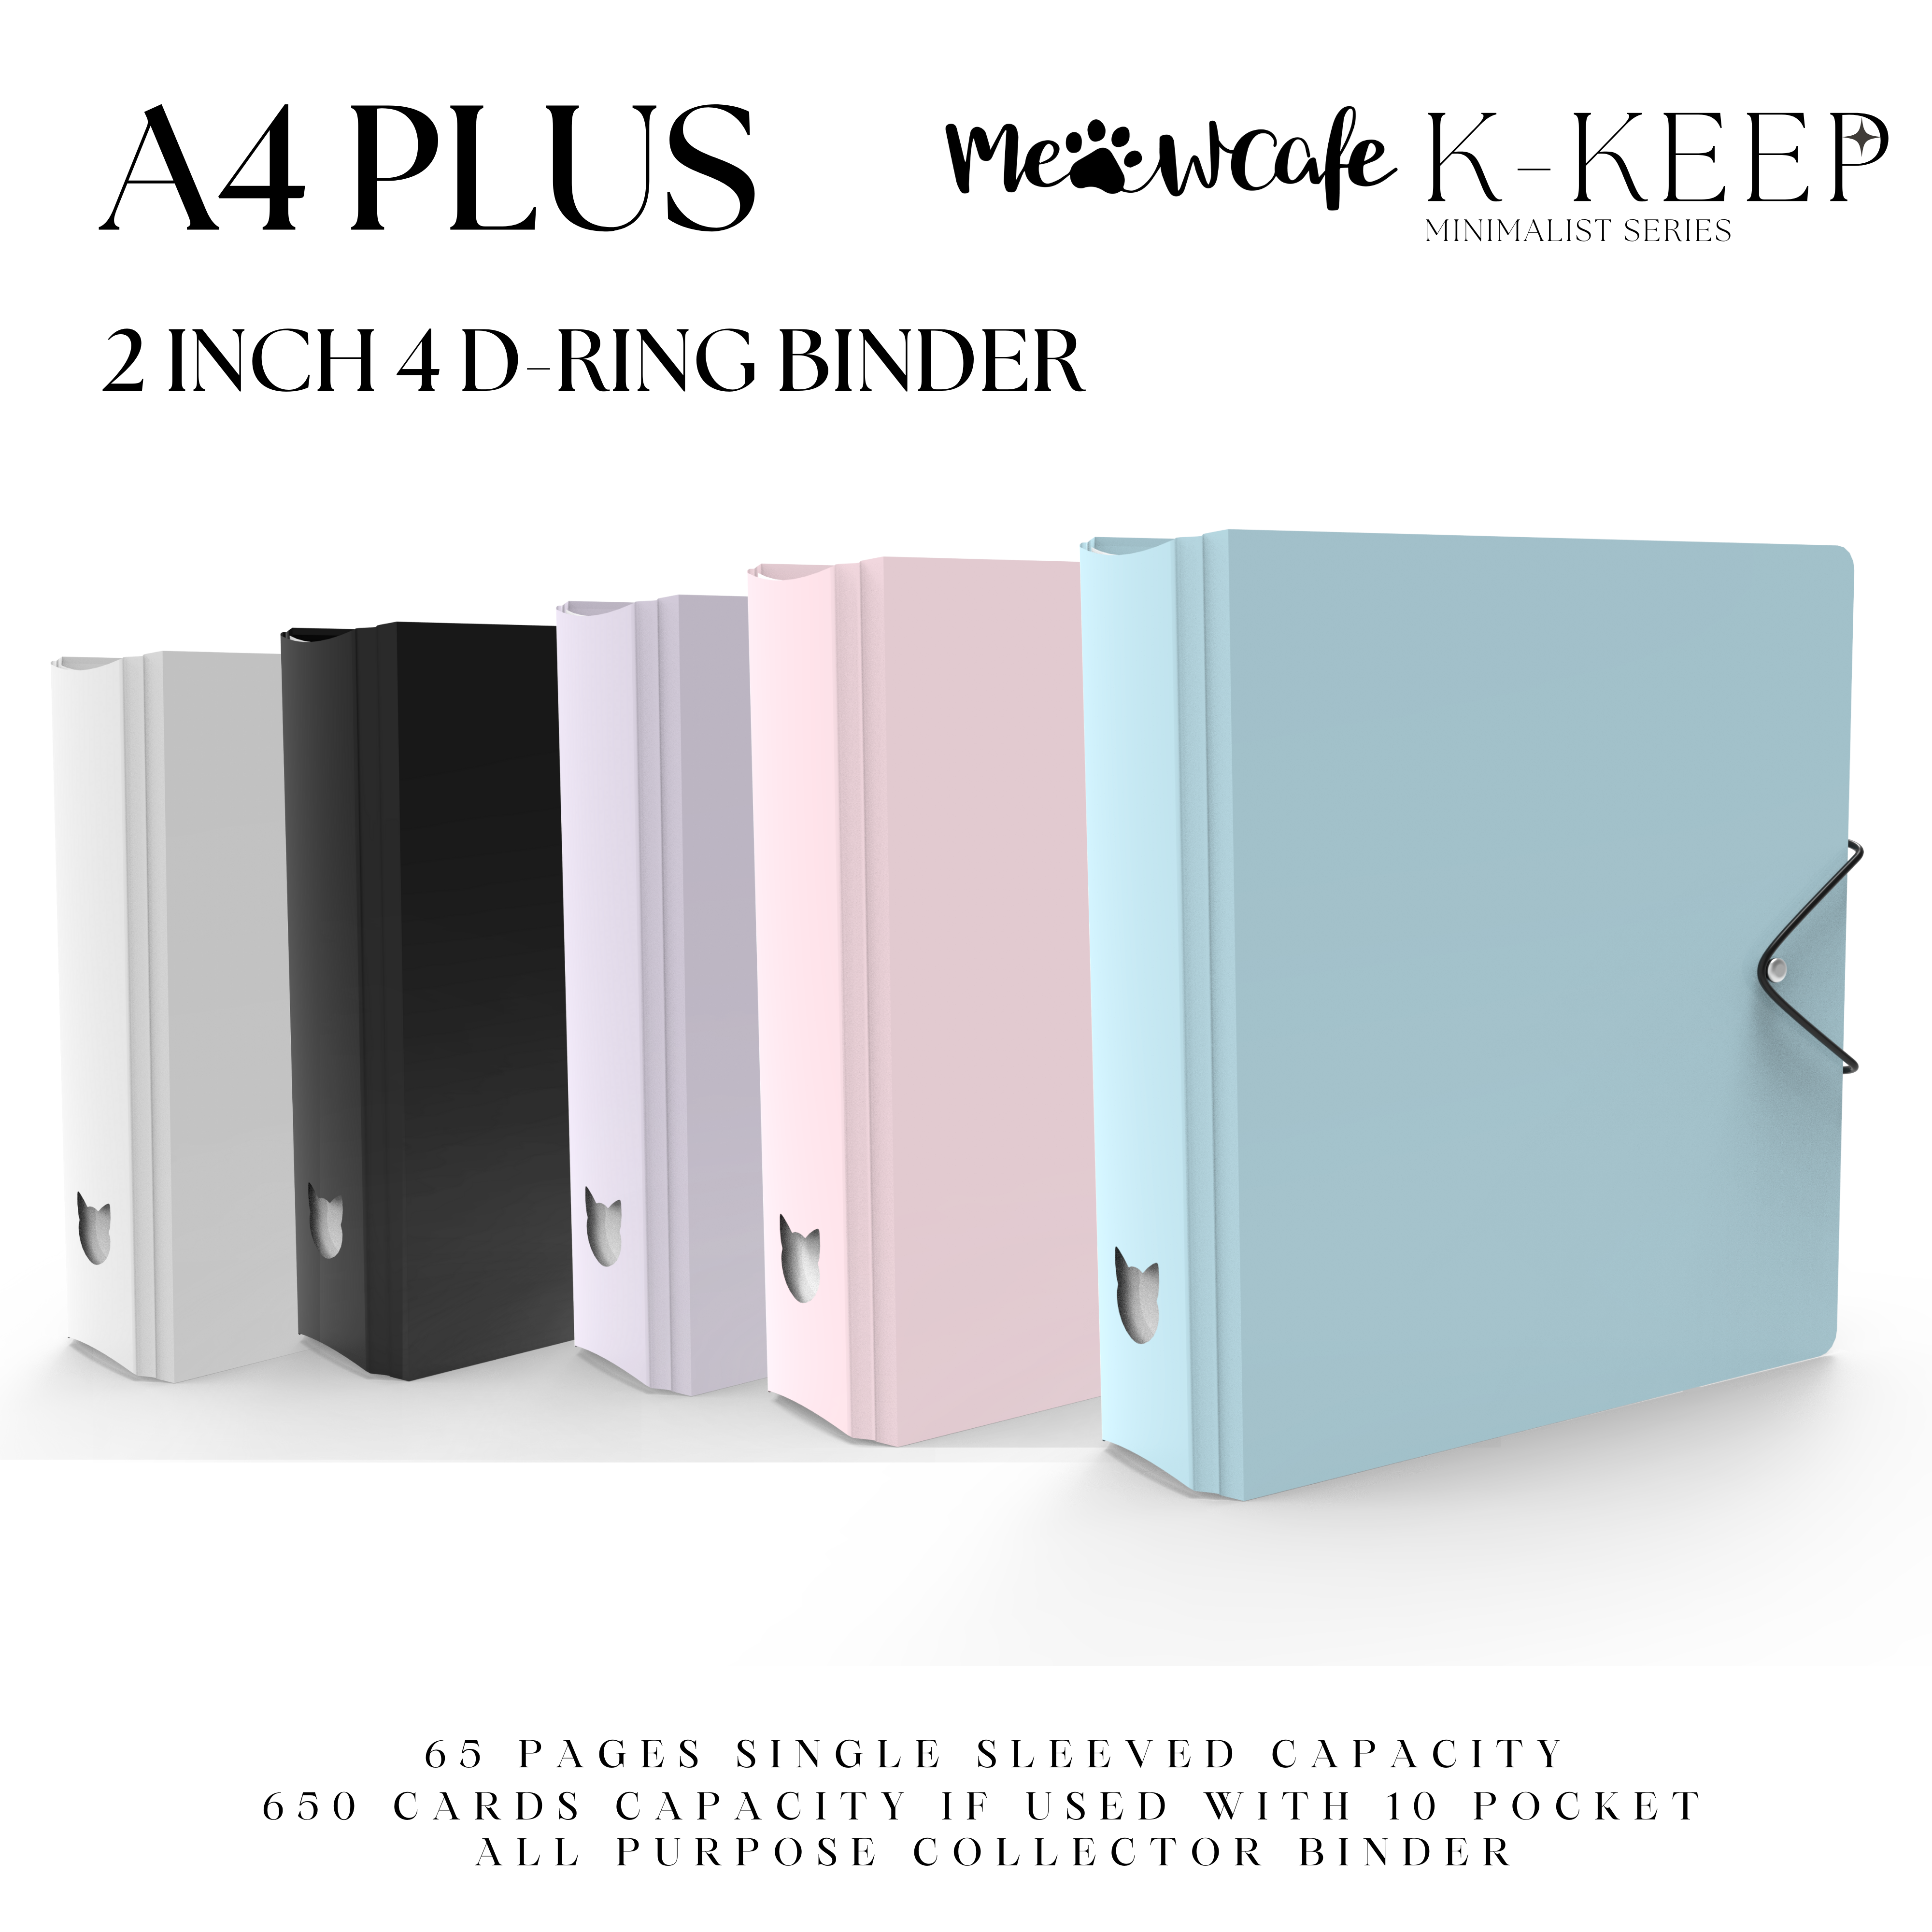 K-KEEP [A4 PLUS] Binder - [2 inch] - [Minimalist Series] - The Most Co